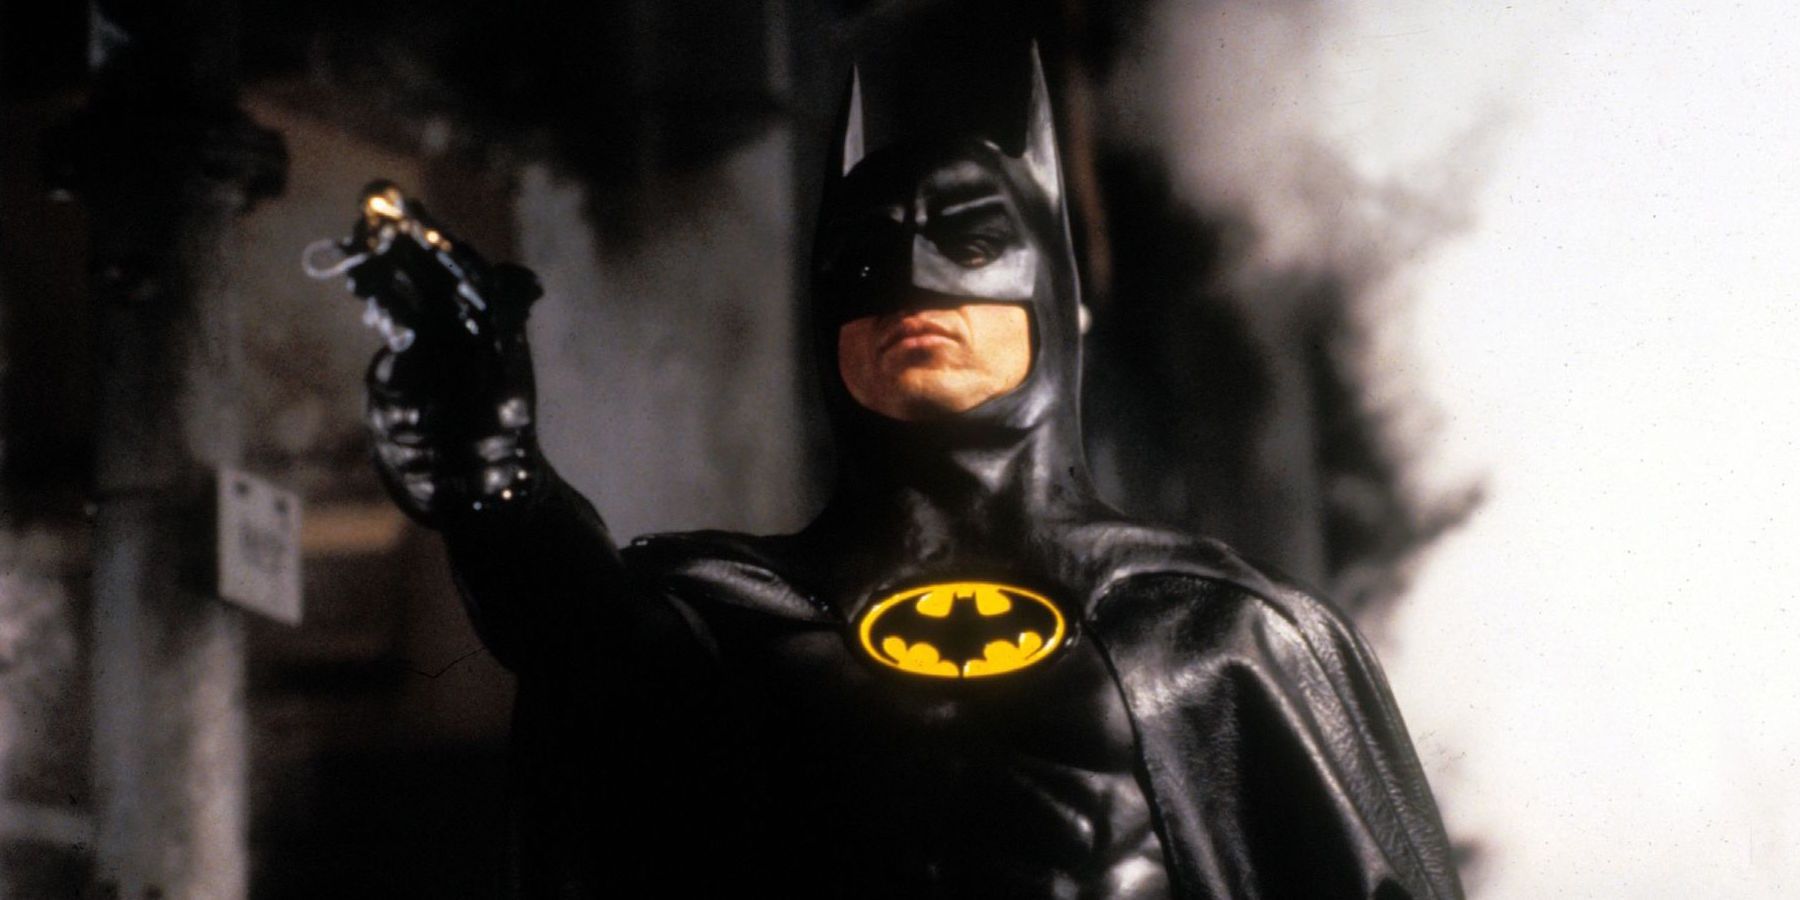 Keaton in Batman costume